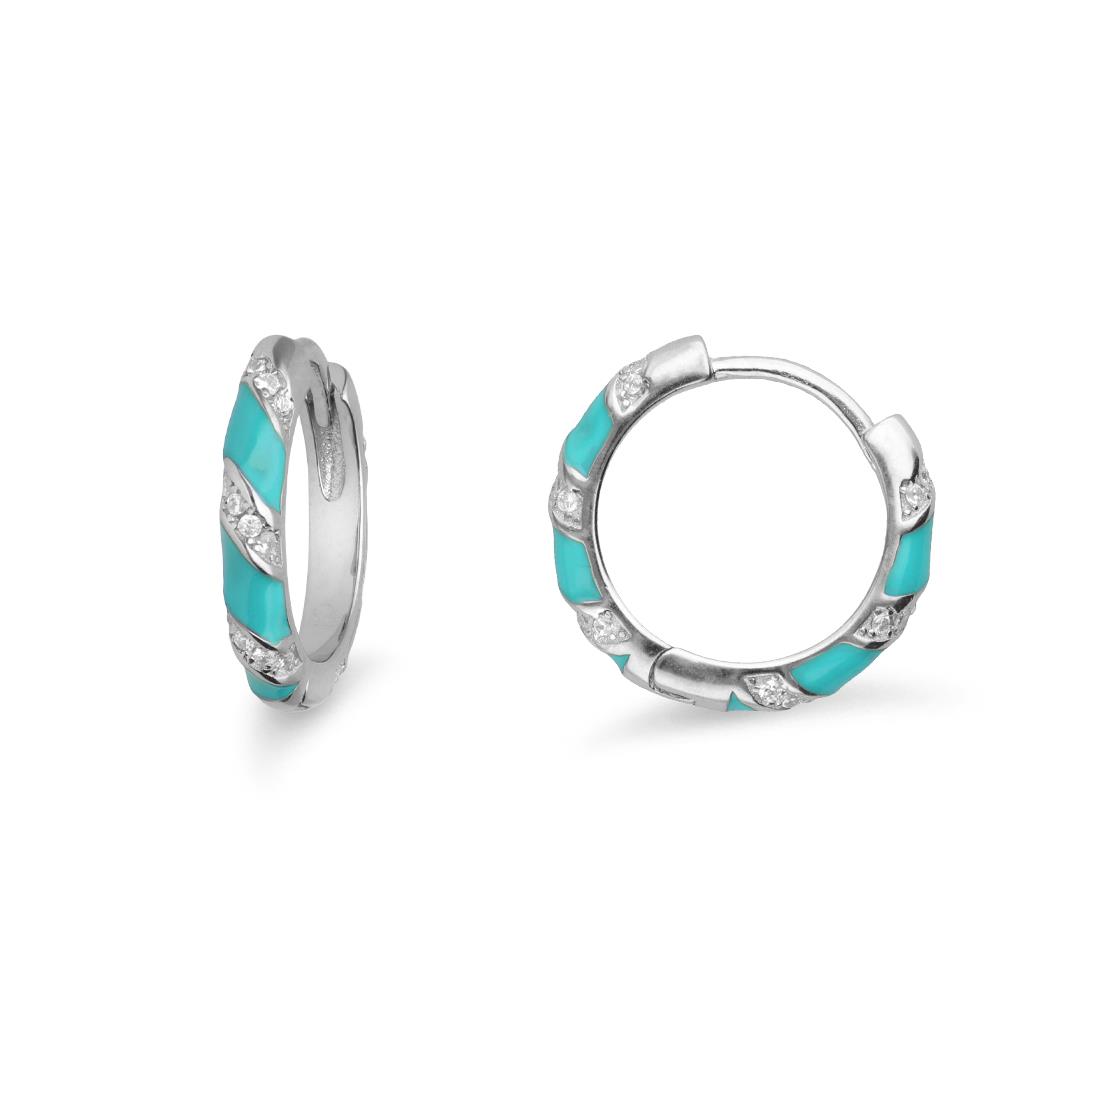 Hoop earrings in silver and turquoise enamel - ORO&CO 925